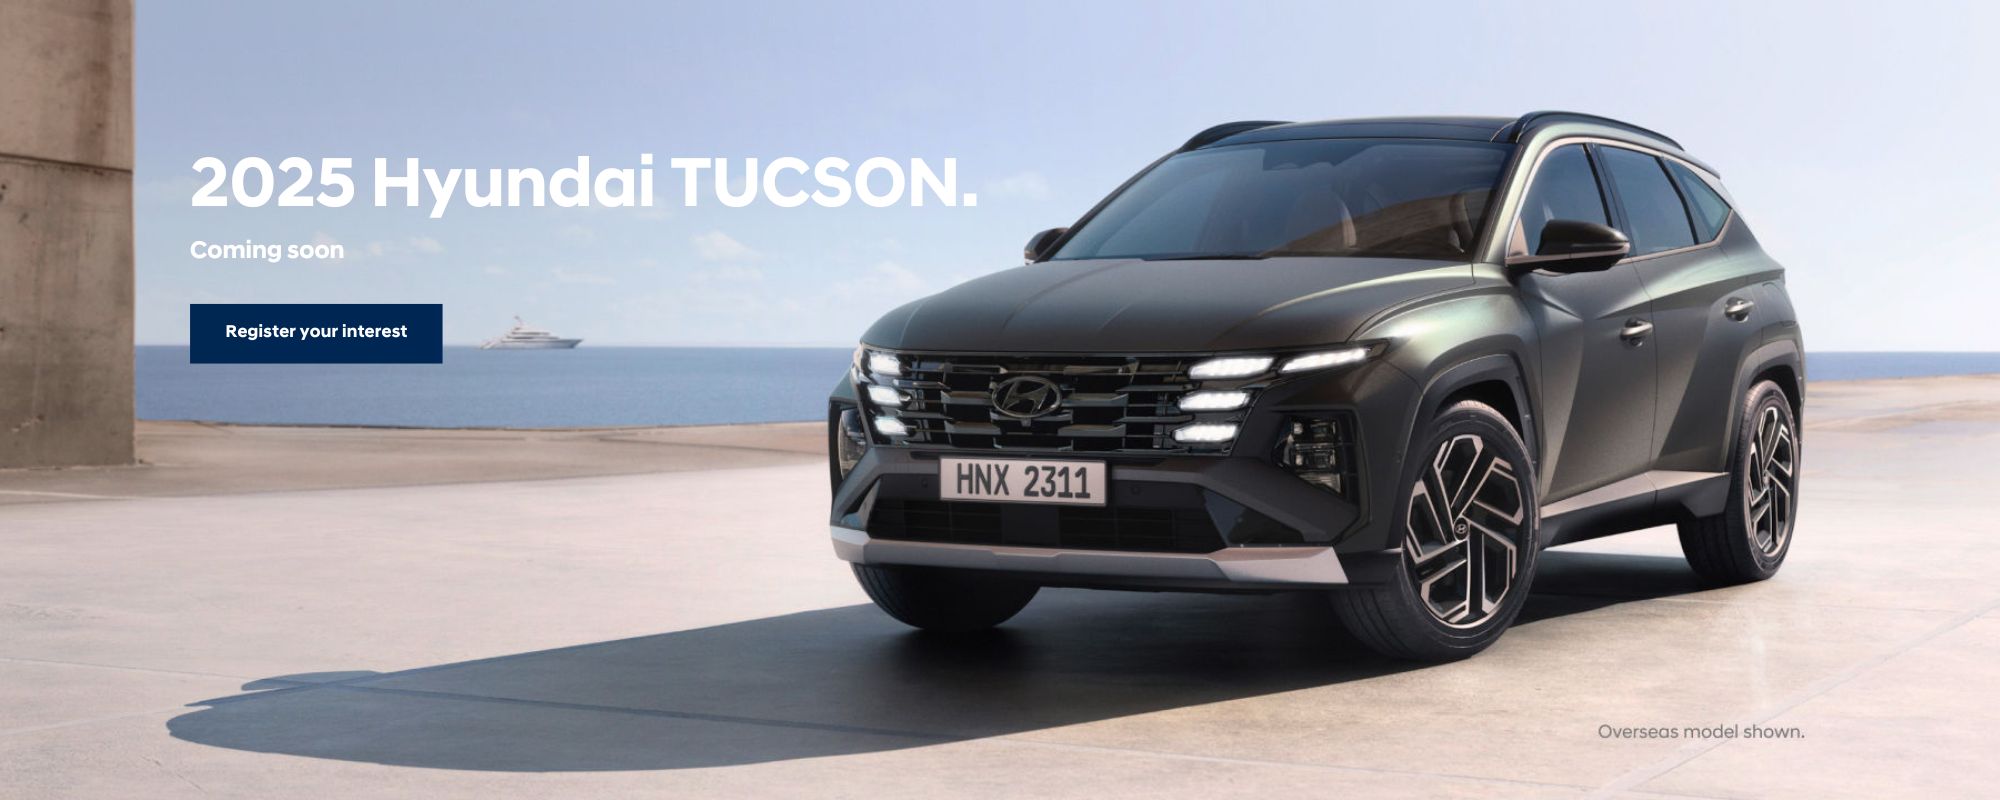 2025 Hyundai Tucson. Coming soon. Register your interest